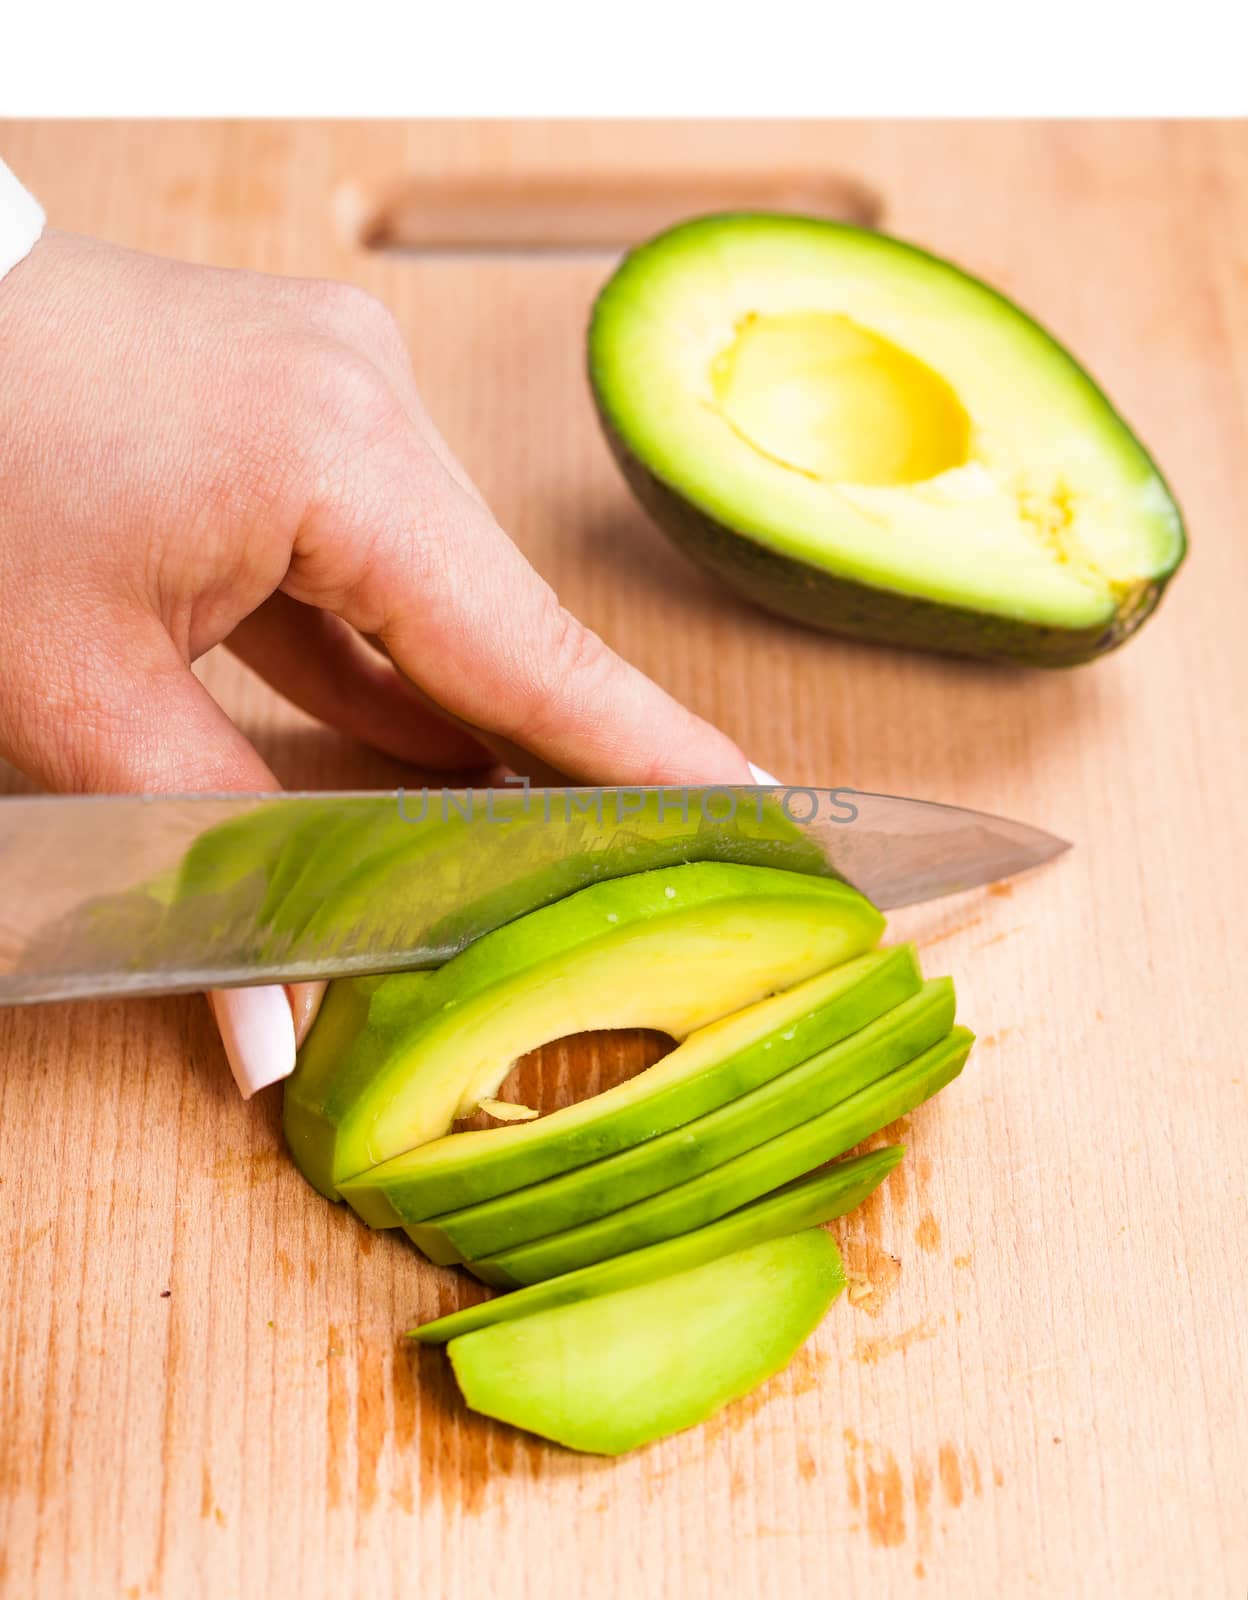  slicing fresh avocado close-up  by MegaArt